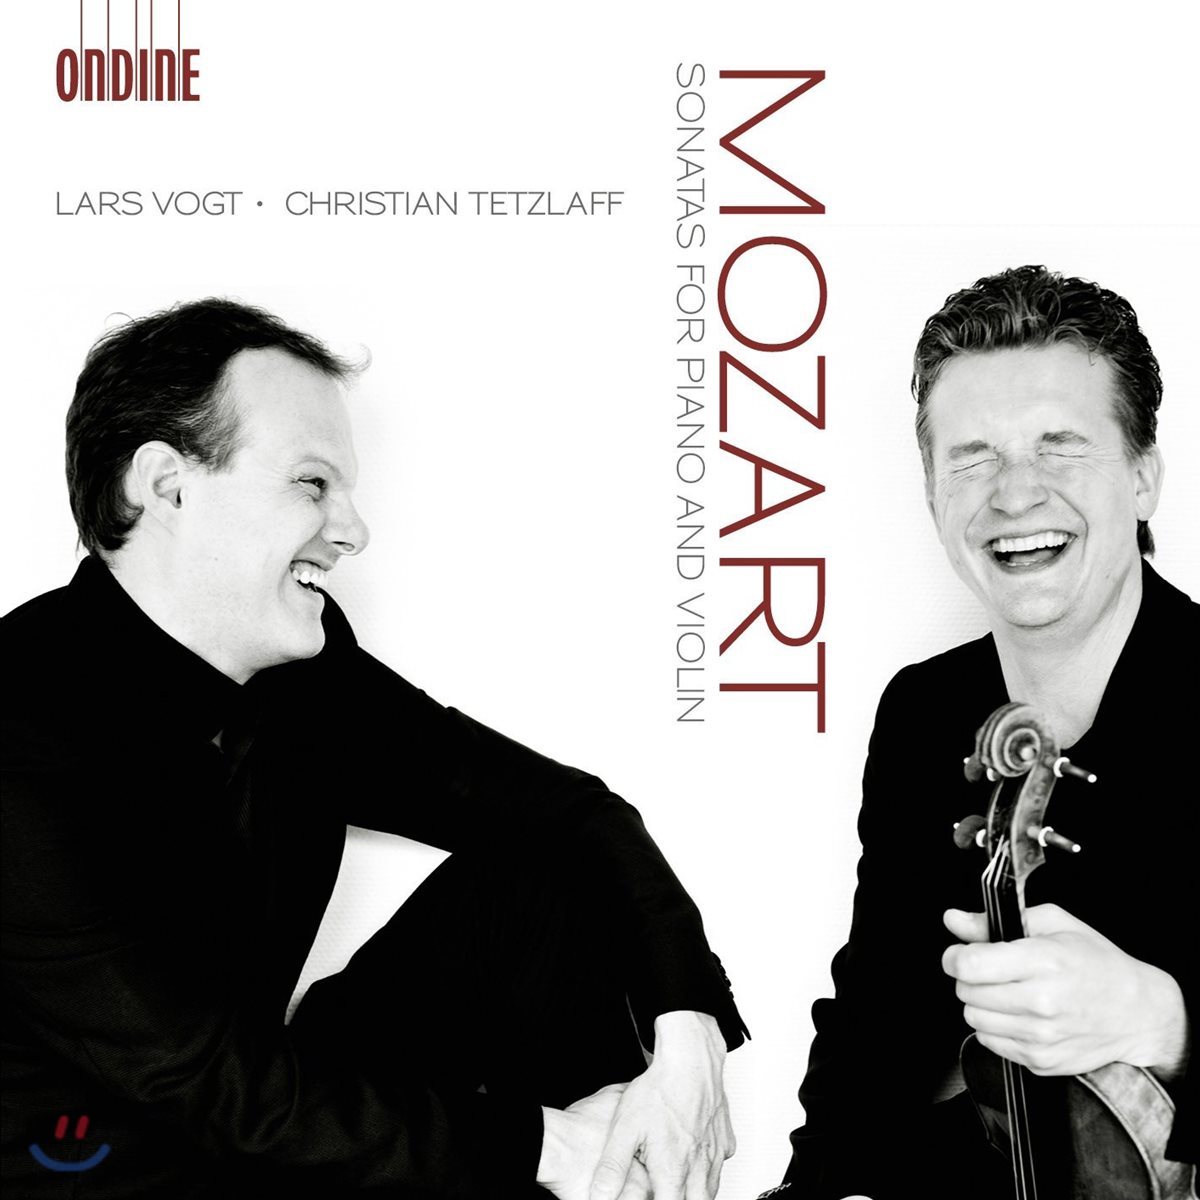 Lars Vogt / Christian Tetzlaff 모차르트: 바이올린 소나타 KV.379, 454, 526 - 라르스 포그트, 크리스티안 테츨라프 (Mozart: Sonatas for Piano and Violin)